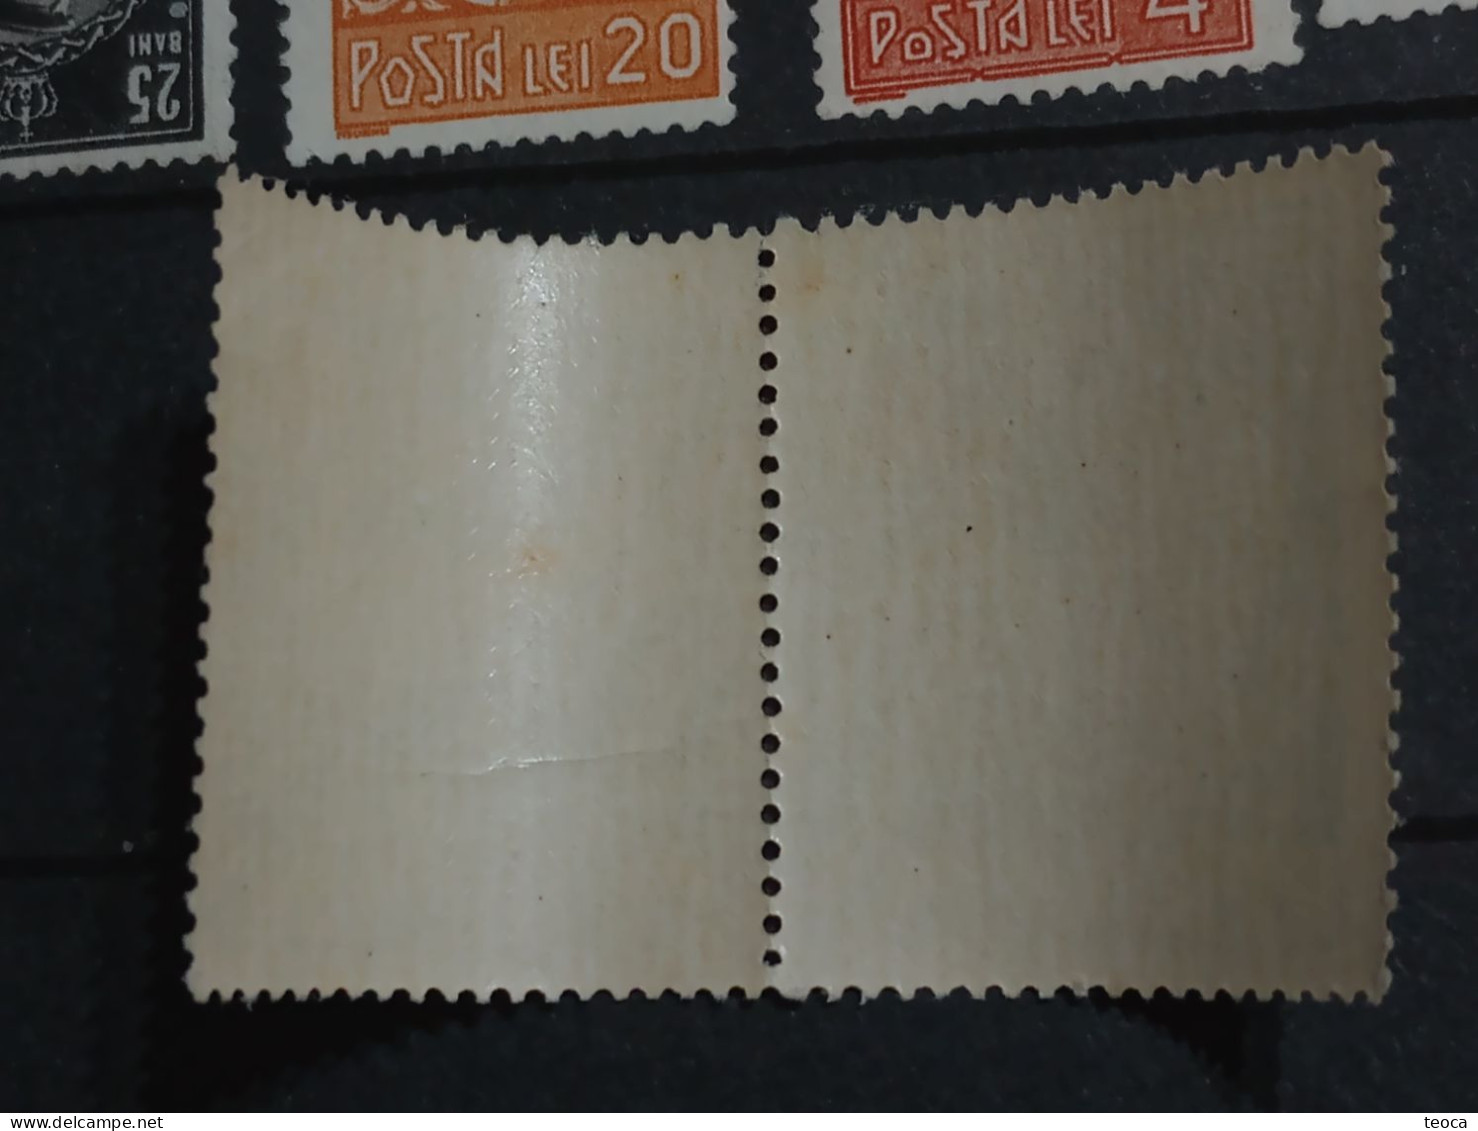 Stamps Errors Romania 1957 # Mi 1665,printed With Full Circle Above The Letter R, RED CROSS, DOVE, Pair, Unused, Rarrity - Variétés Et Curiosités